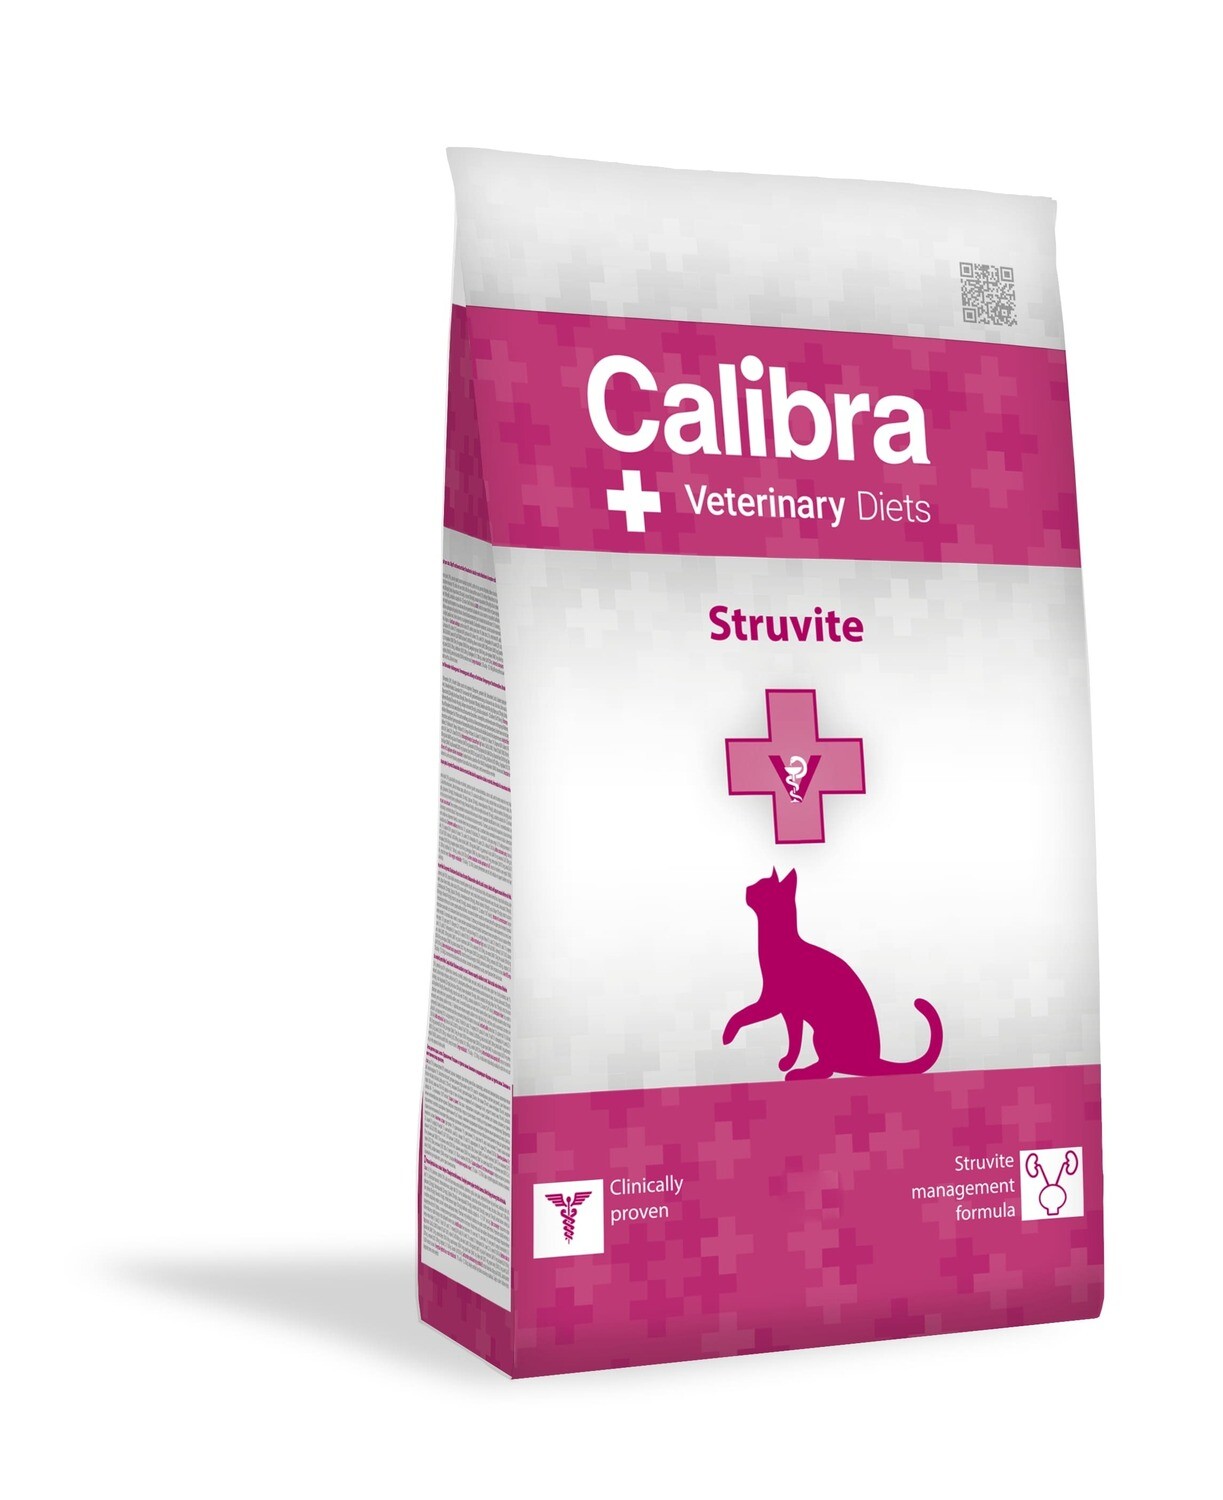 Calibra Veterinary Diets Struvite Chat, Contenu: Croquettes 2 kg